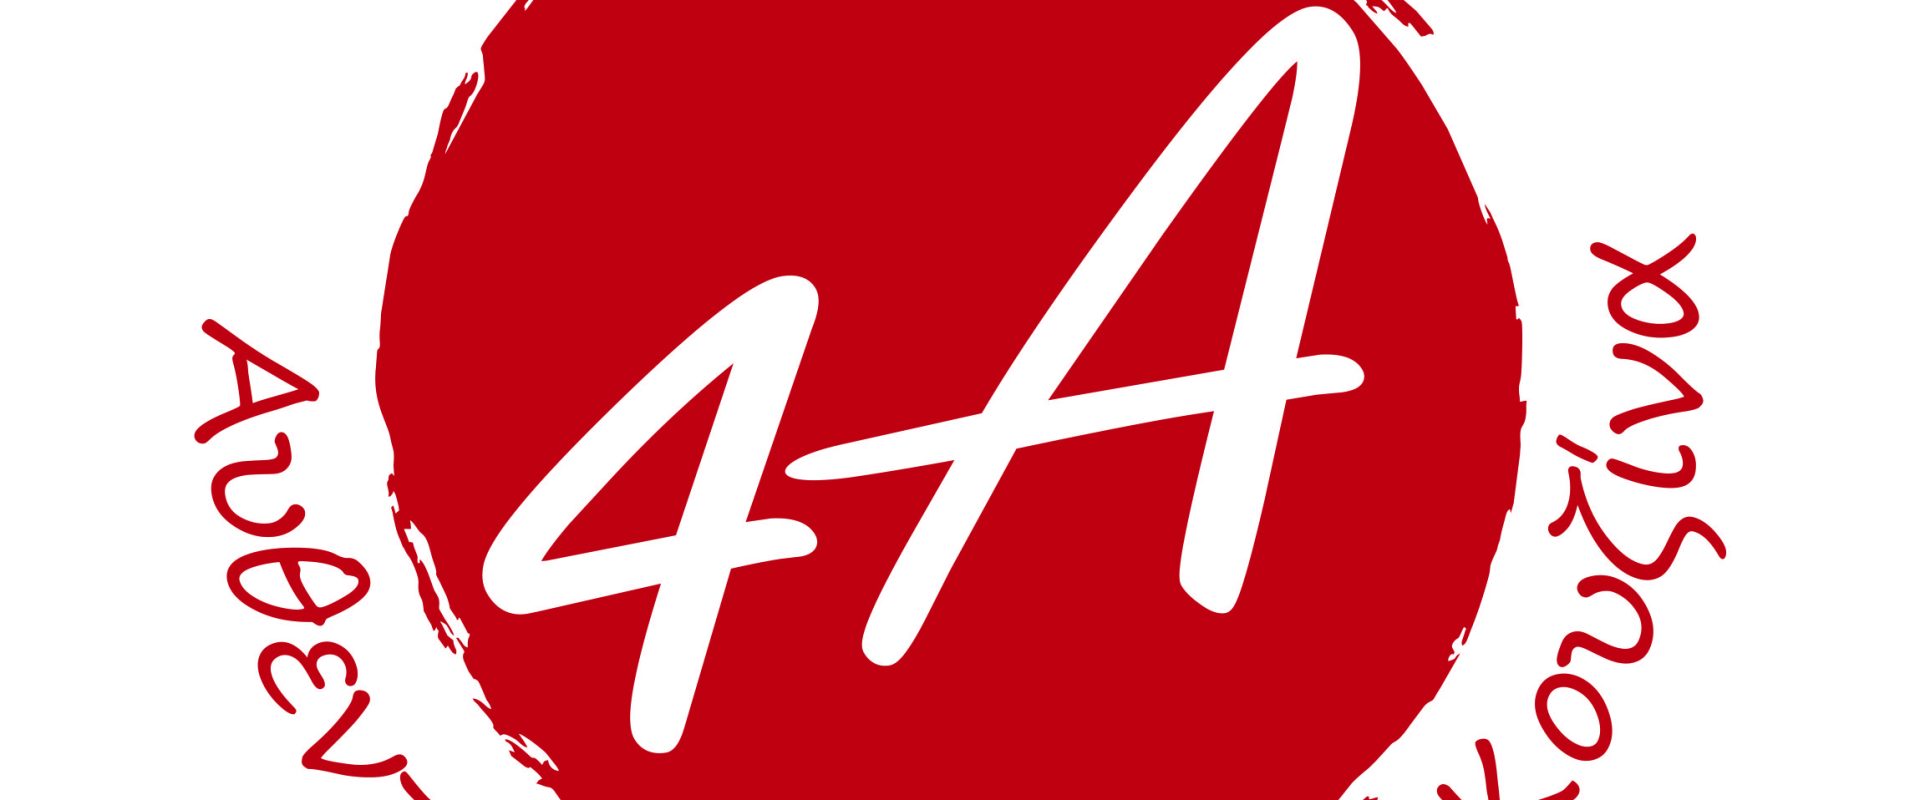 4A armenian cusine logo illustrator